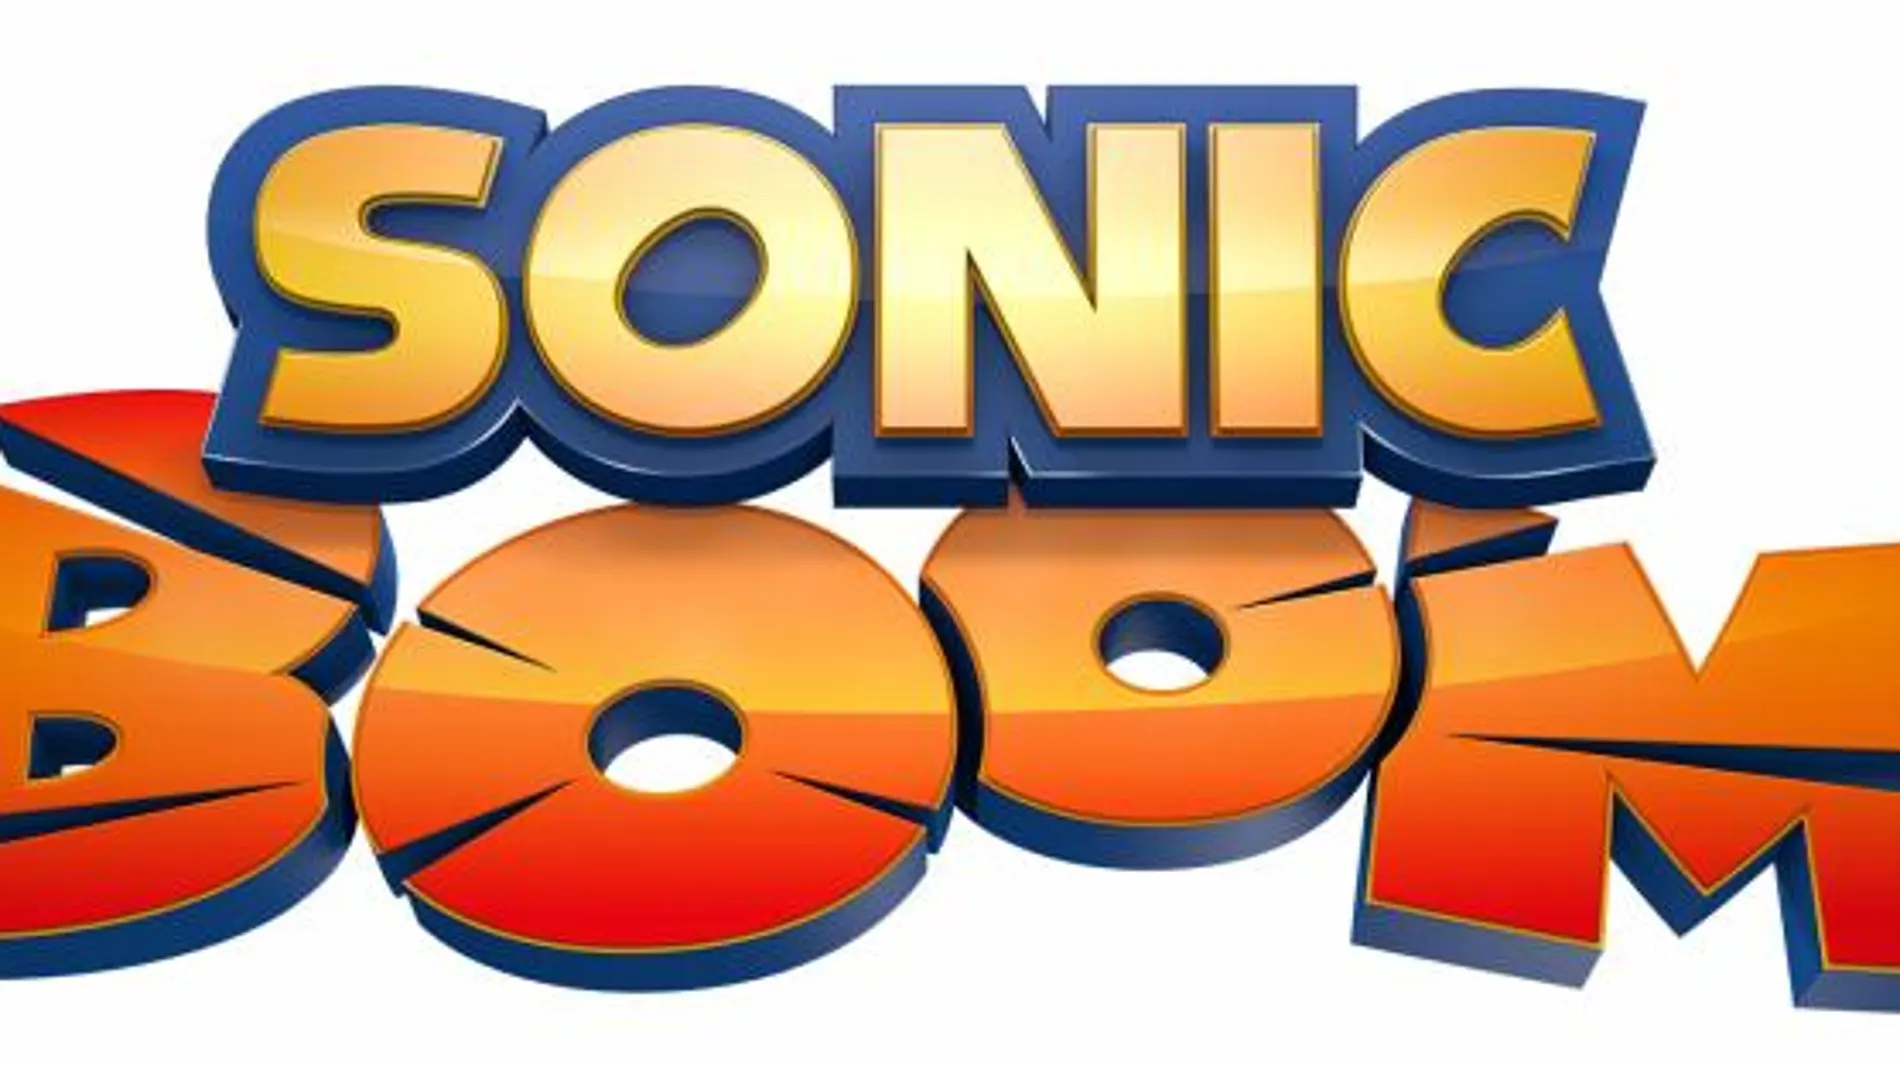 Sonic Boom calienta motores antes del E3